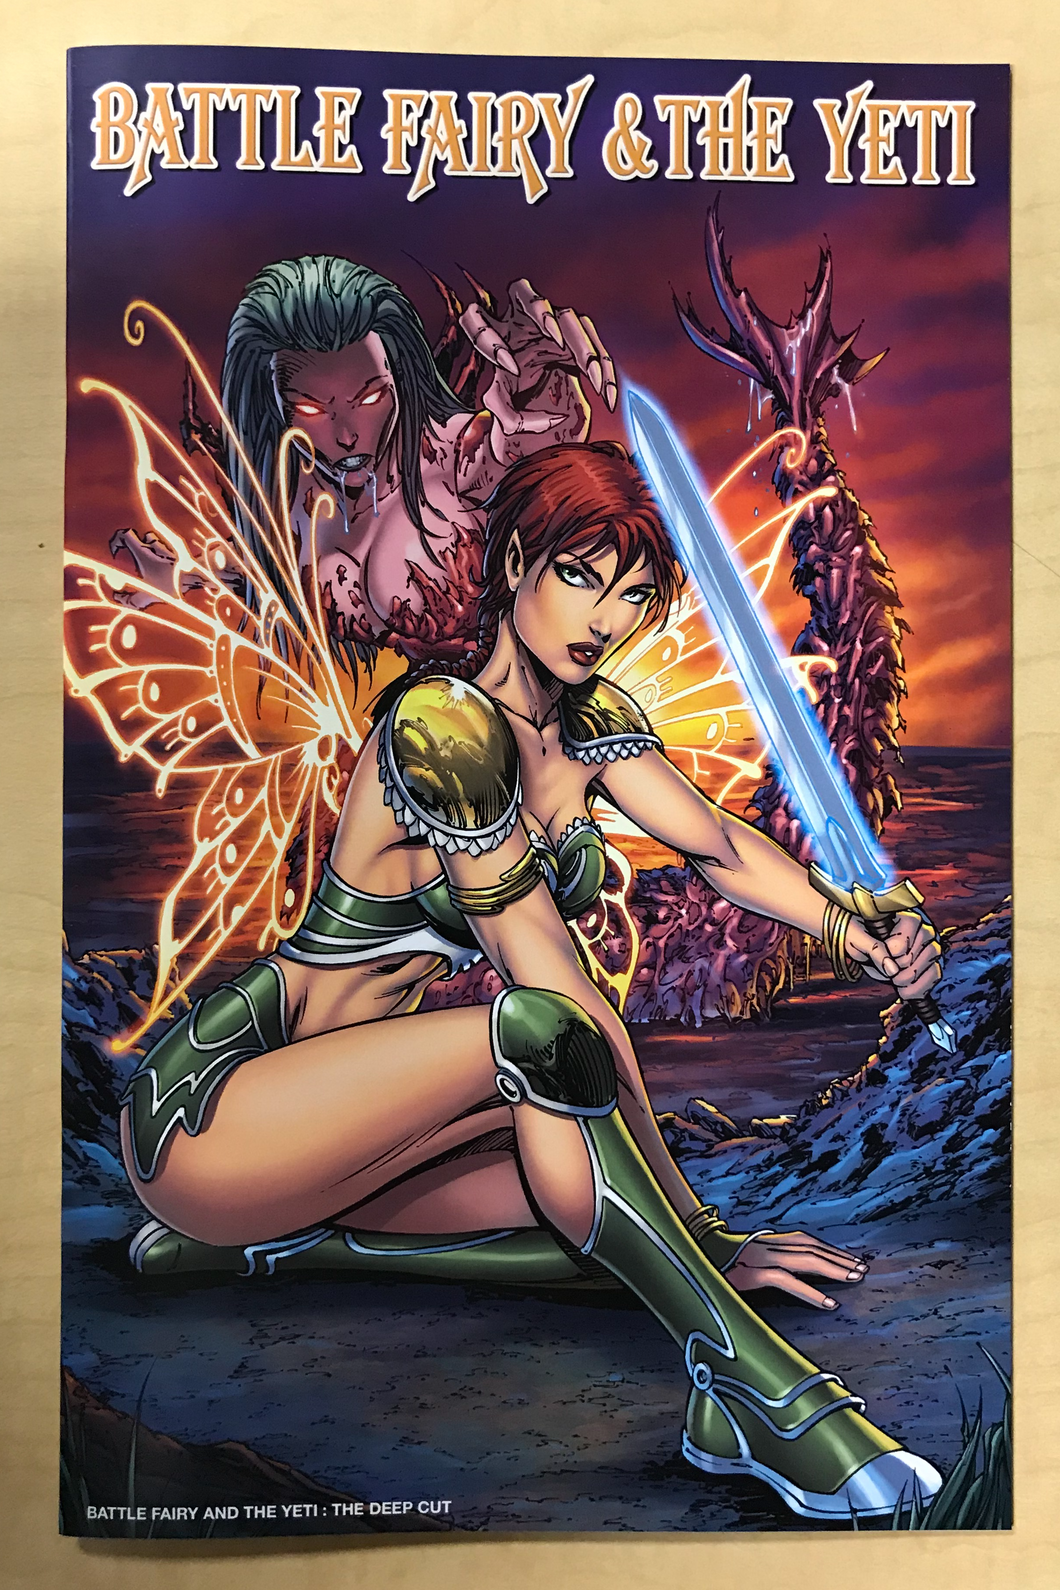 Battle Fairy & The Yeti: The Deep Cut Kickstarter Exclusive Variant Cover by Marat Mychaels